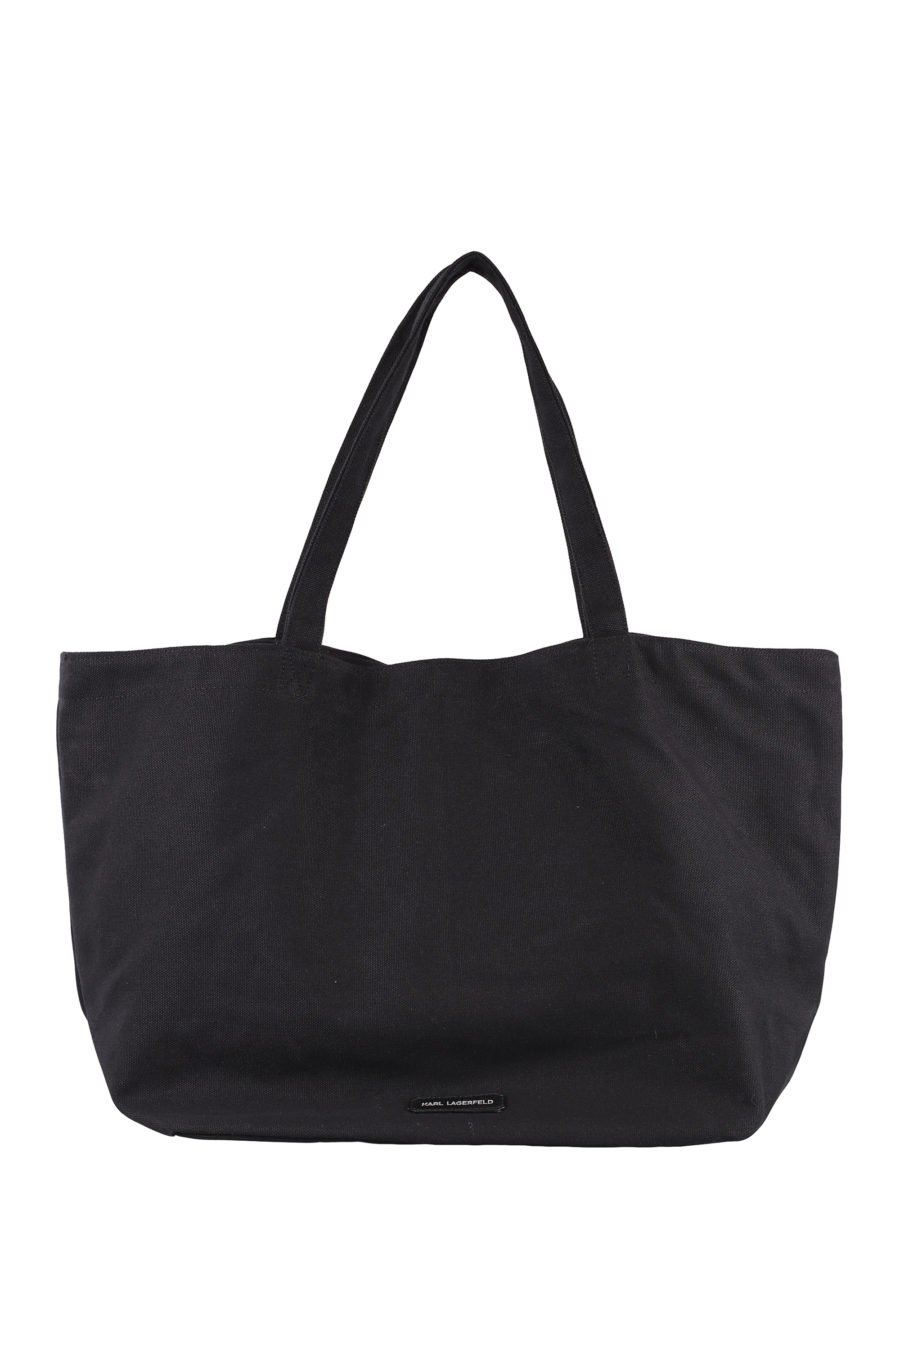 Black "Tote Ikonik" bag with silhouette - IMG 0999